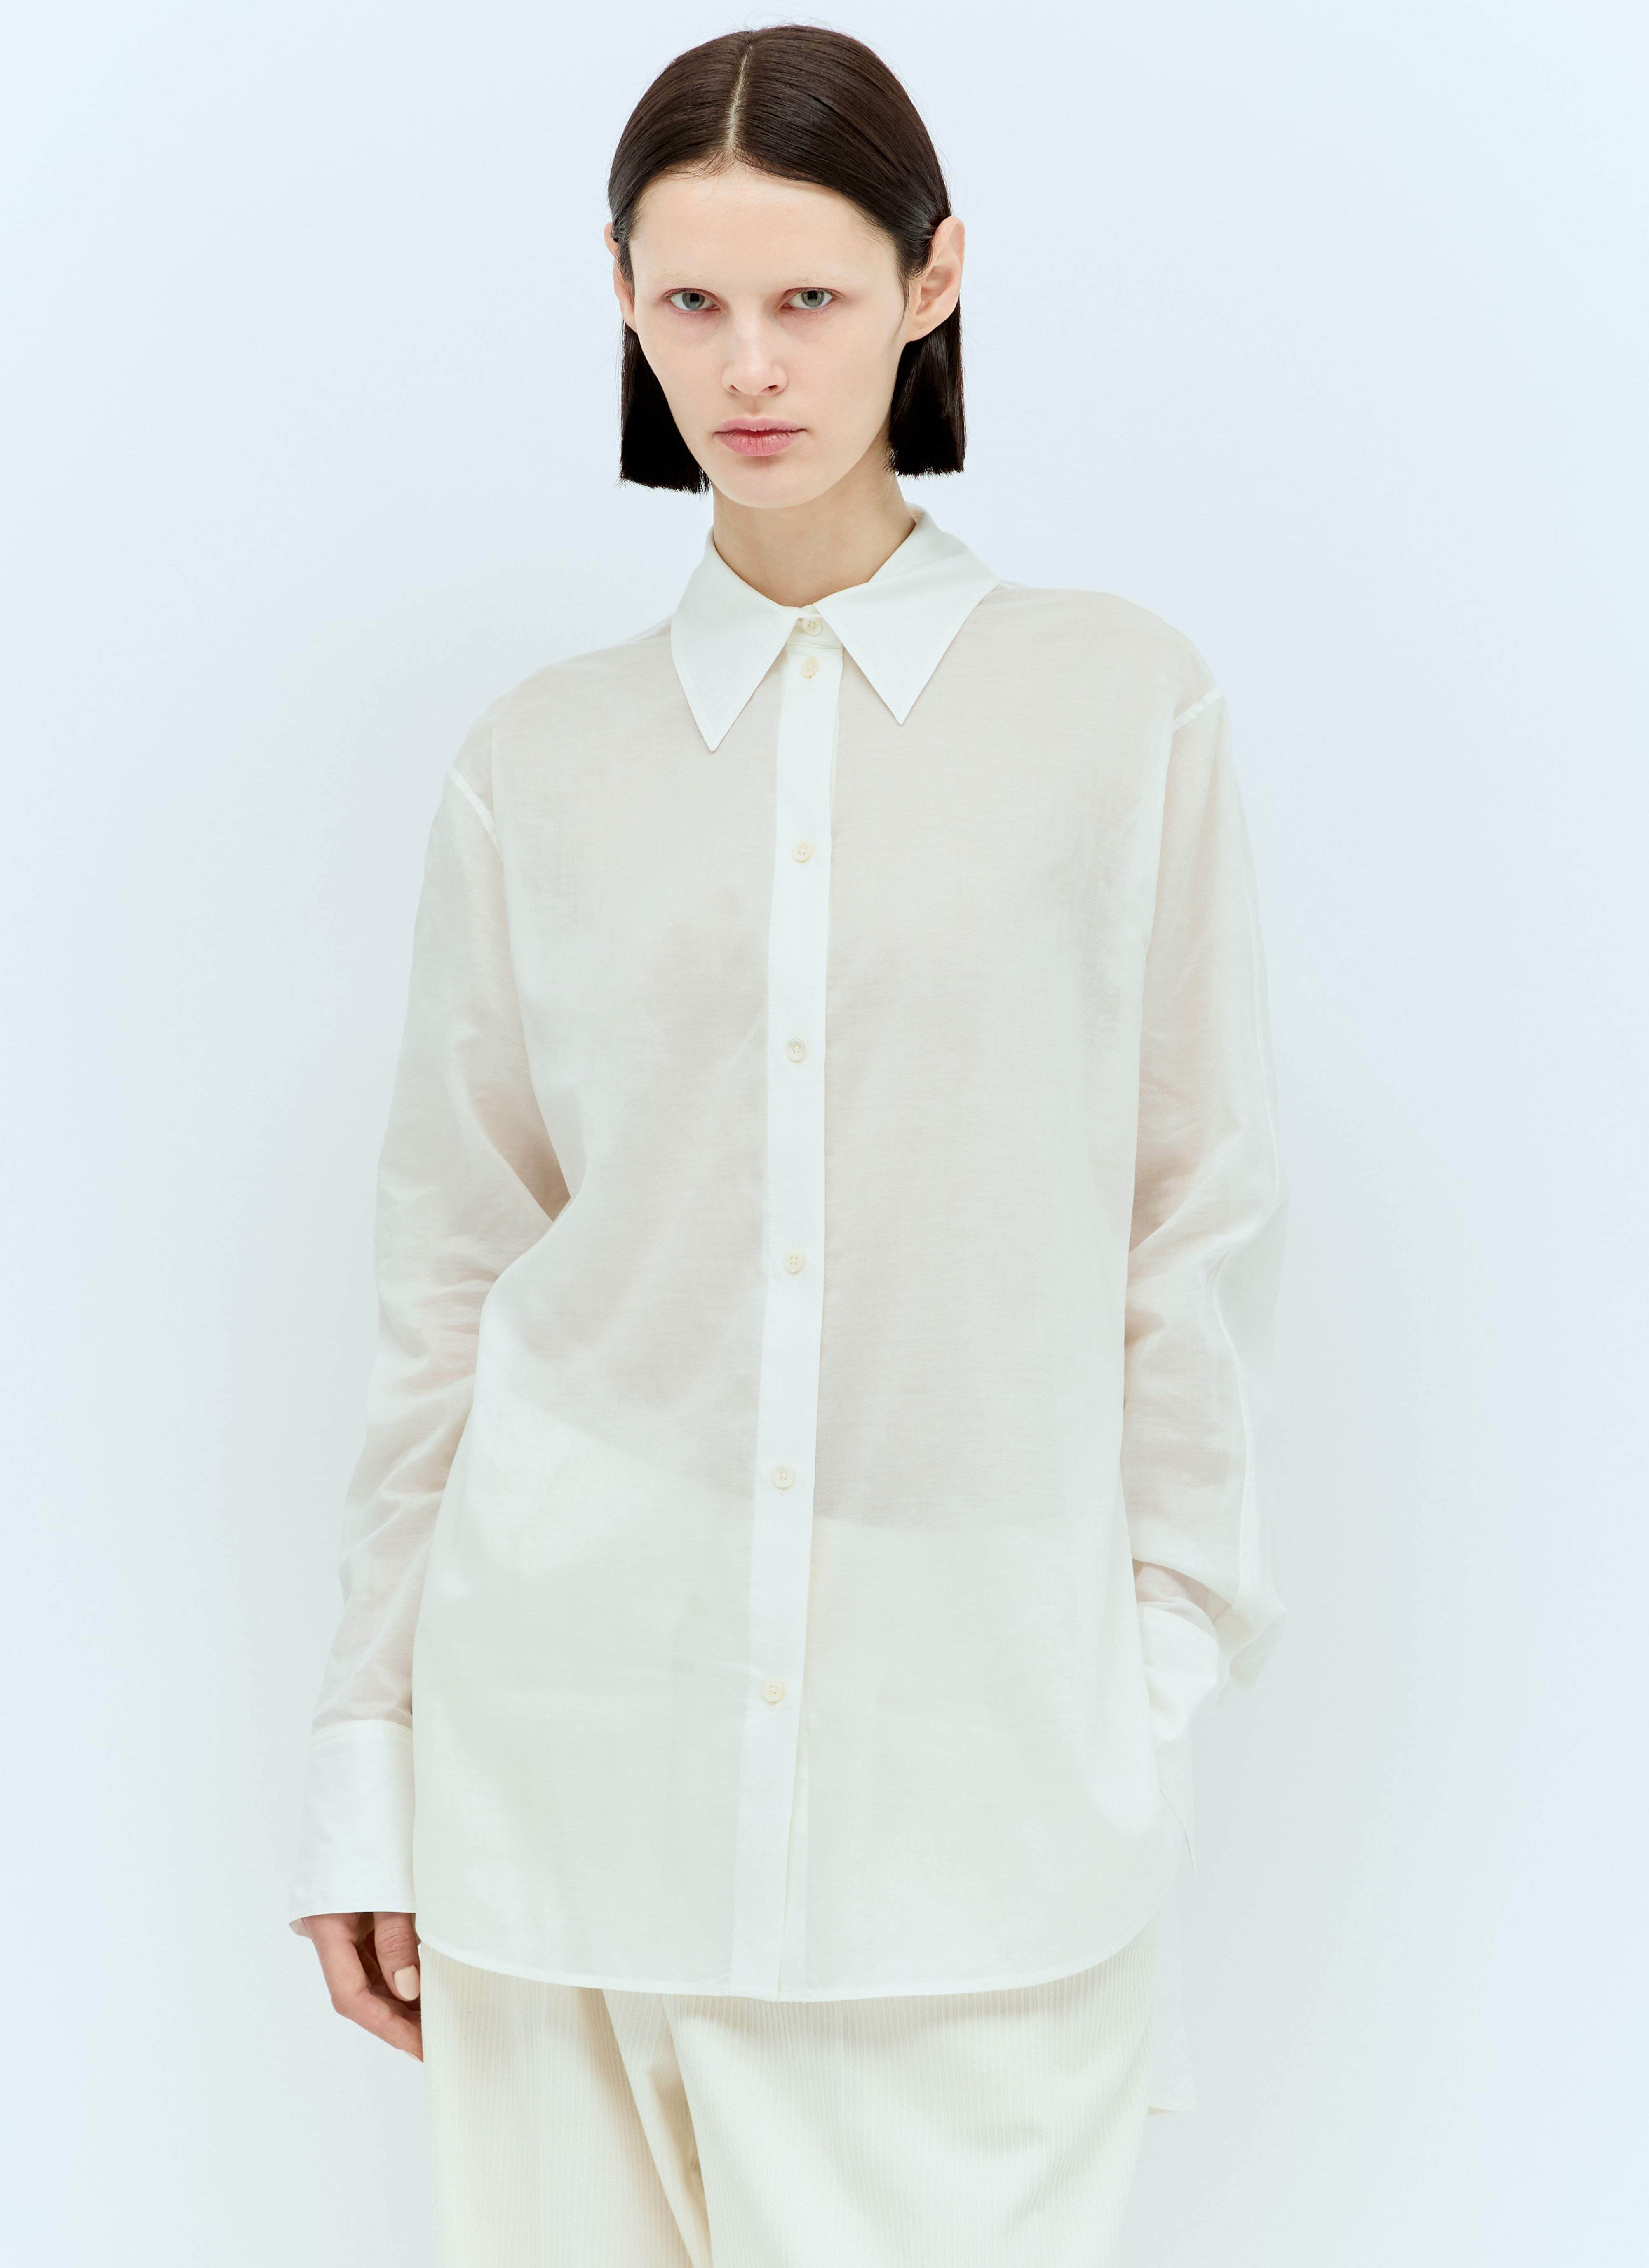 Jean Paul Gaultier x Shayne Oliver Kimono-Sleeve Shirt Black jps0257005